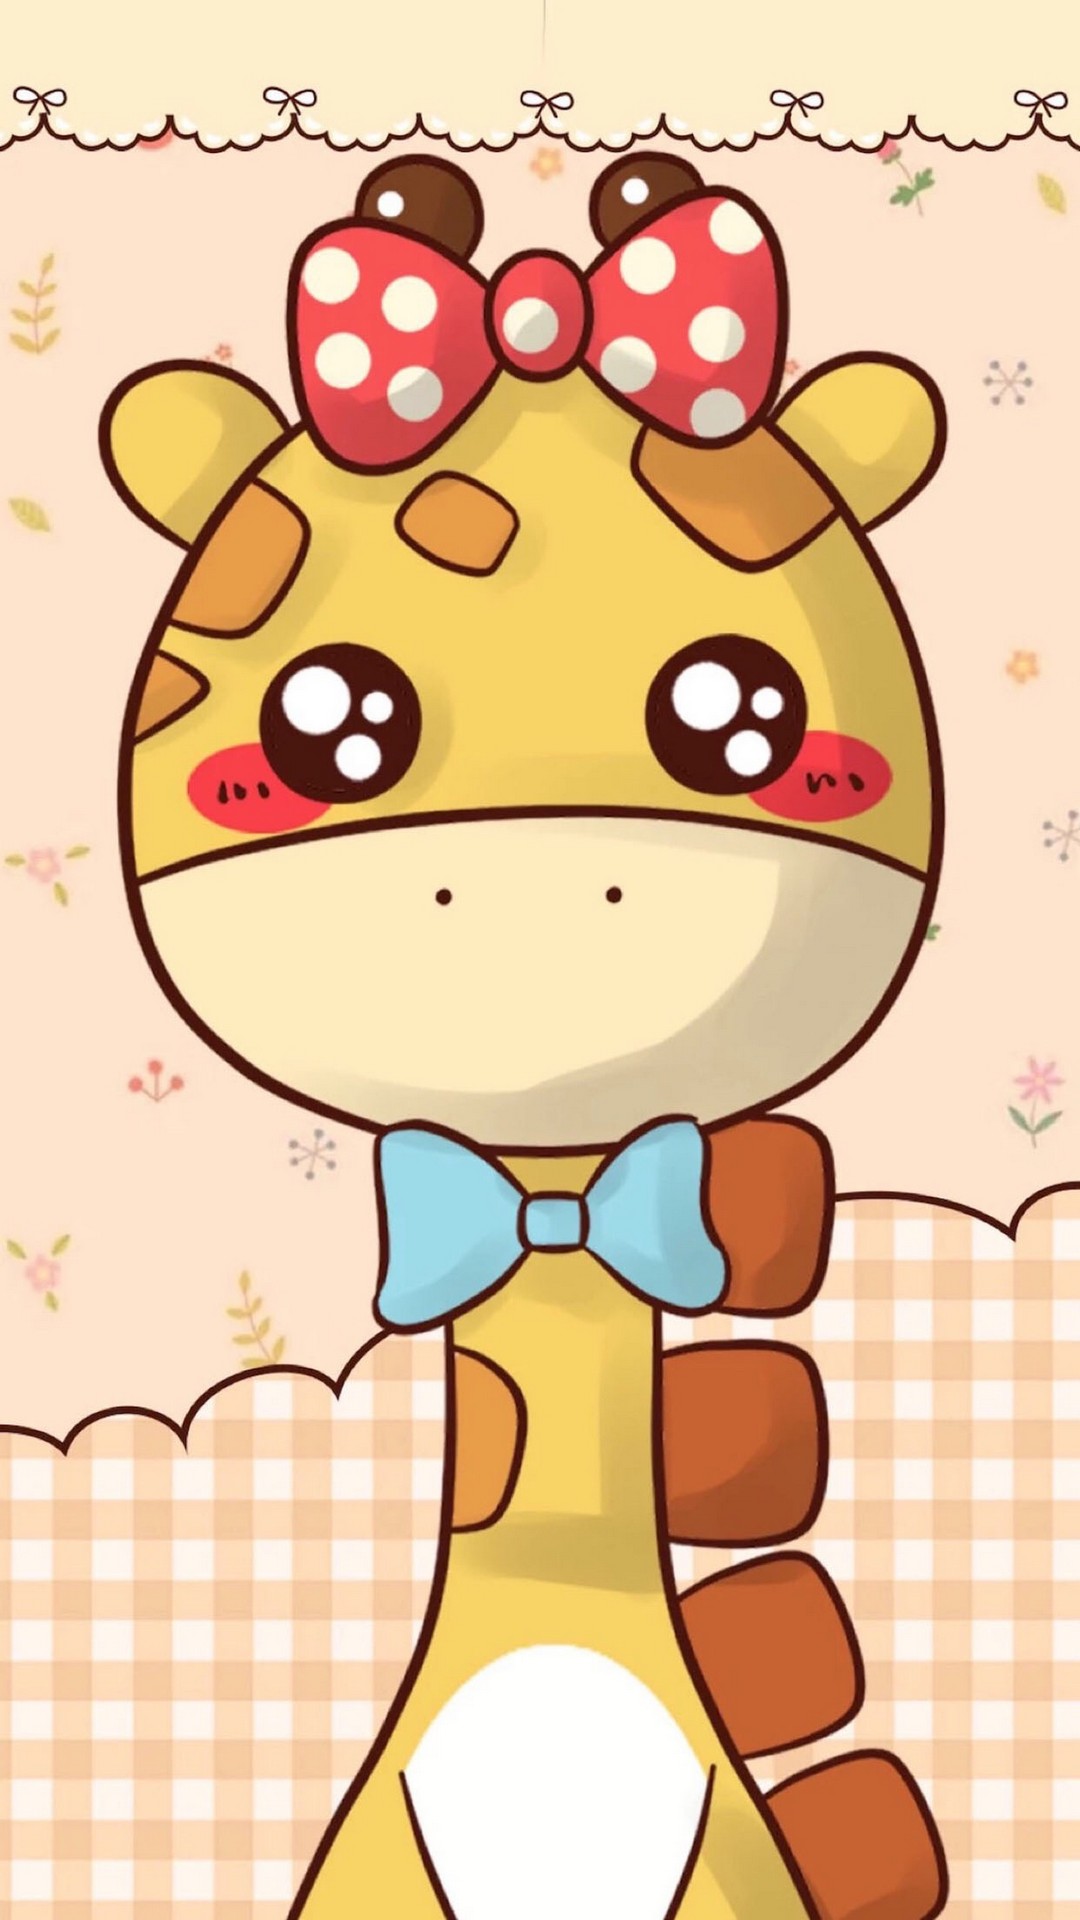 Cute Giraffe Wallpaper Android resolution 1080x1920